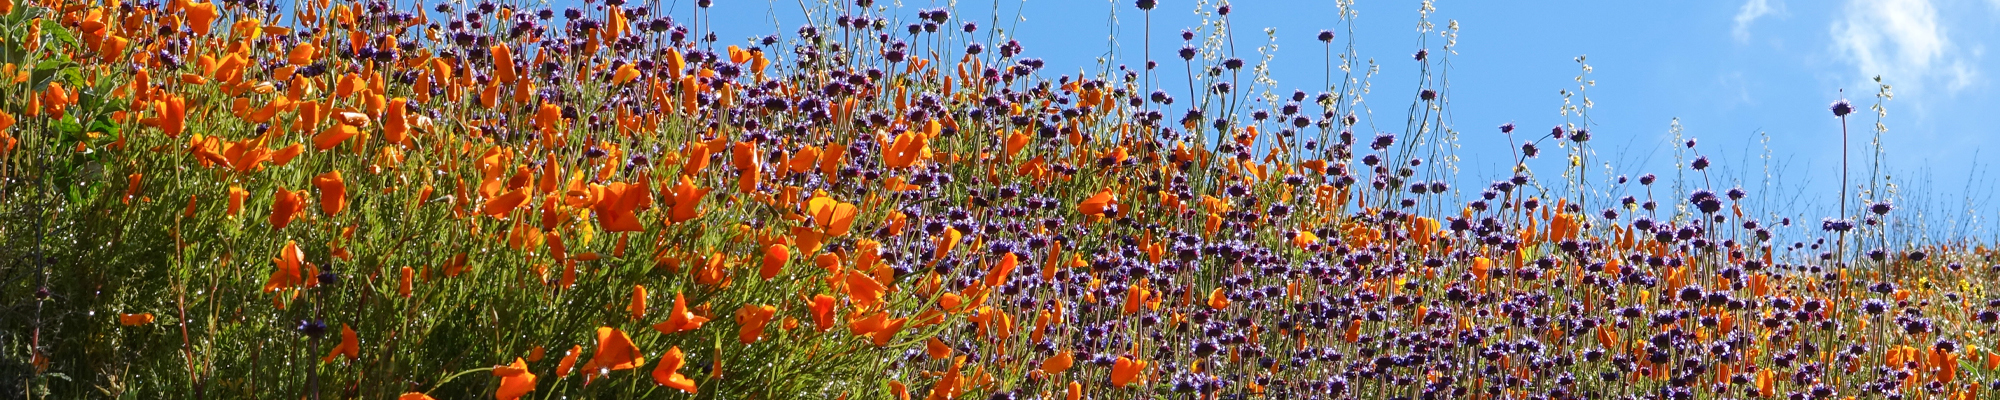 field of poppies california